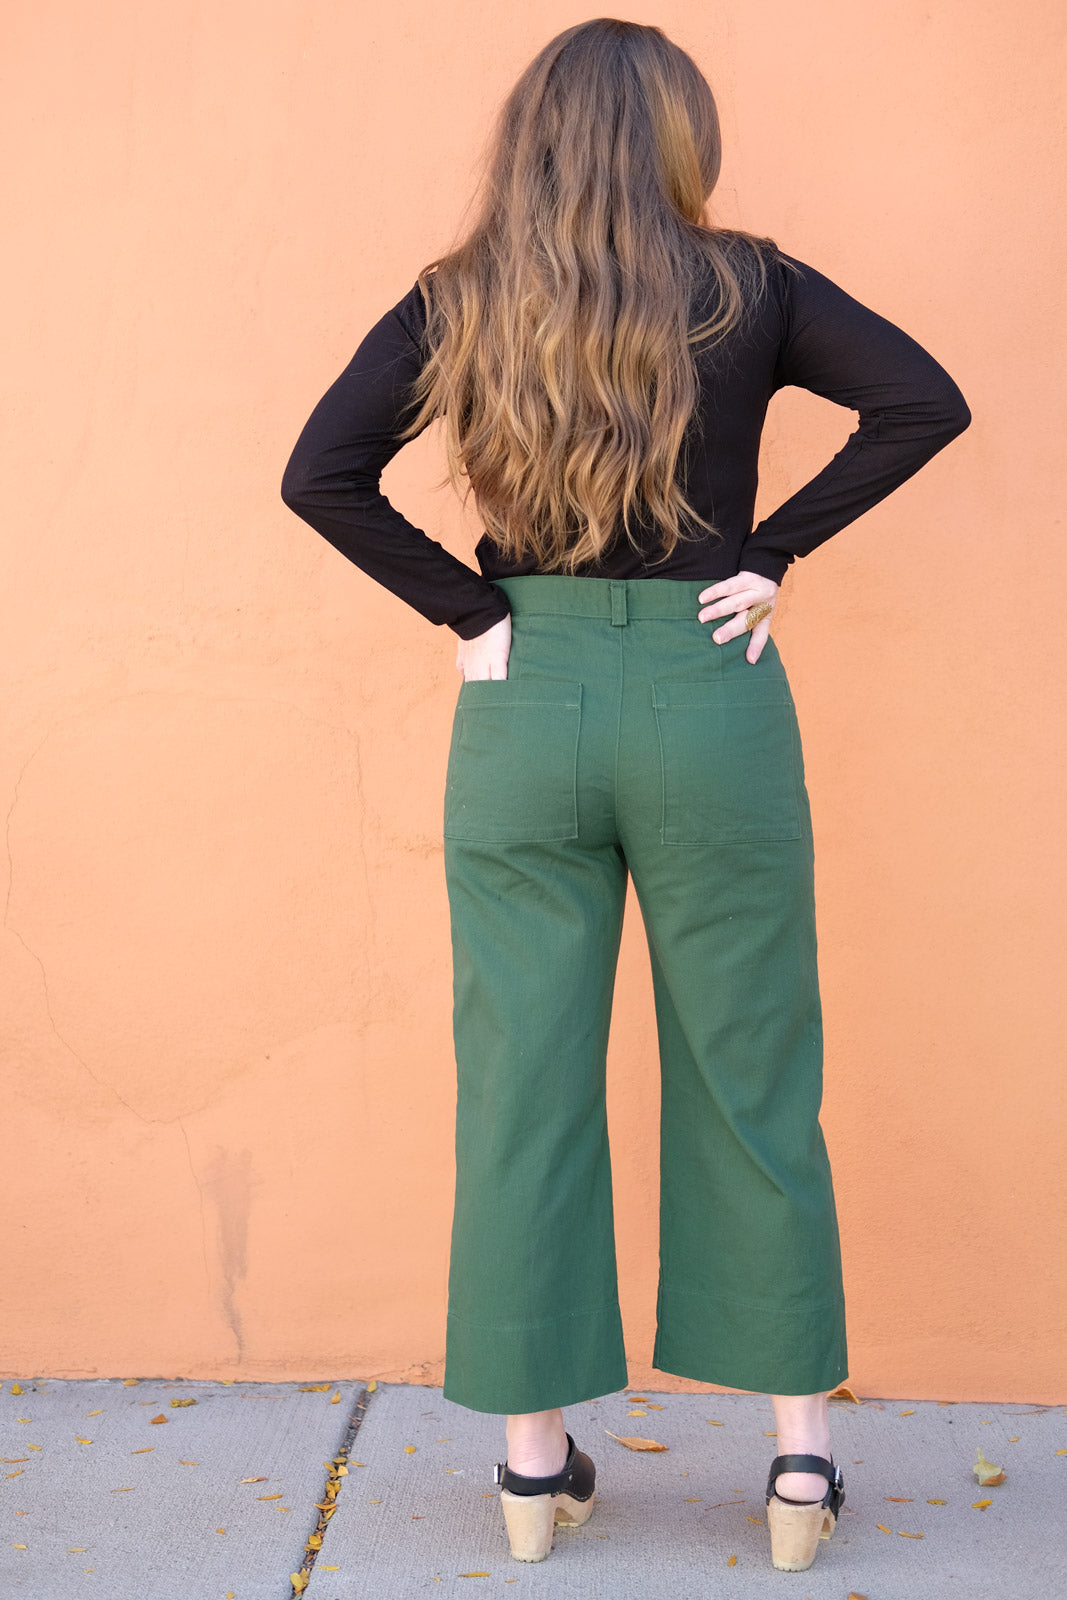 Kelli Ward's Lander Pants